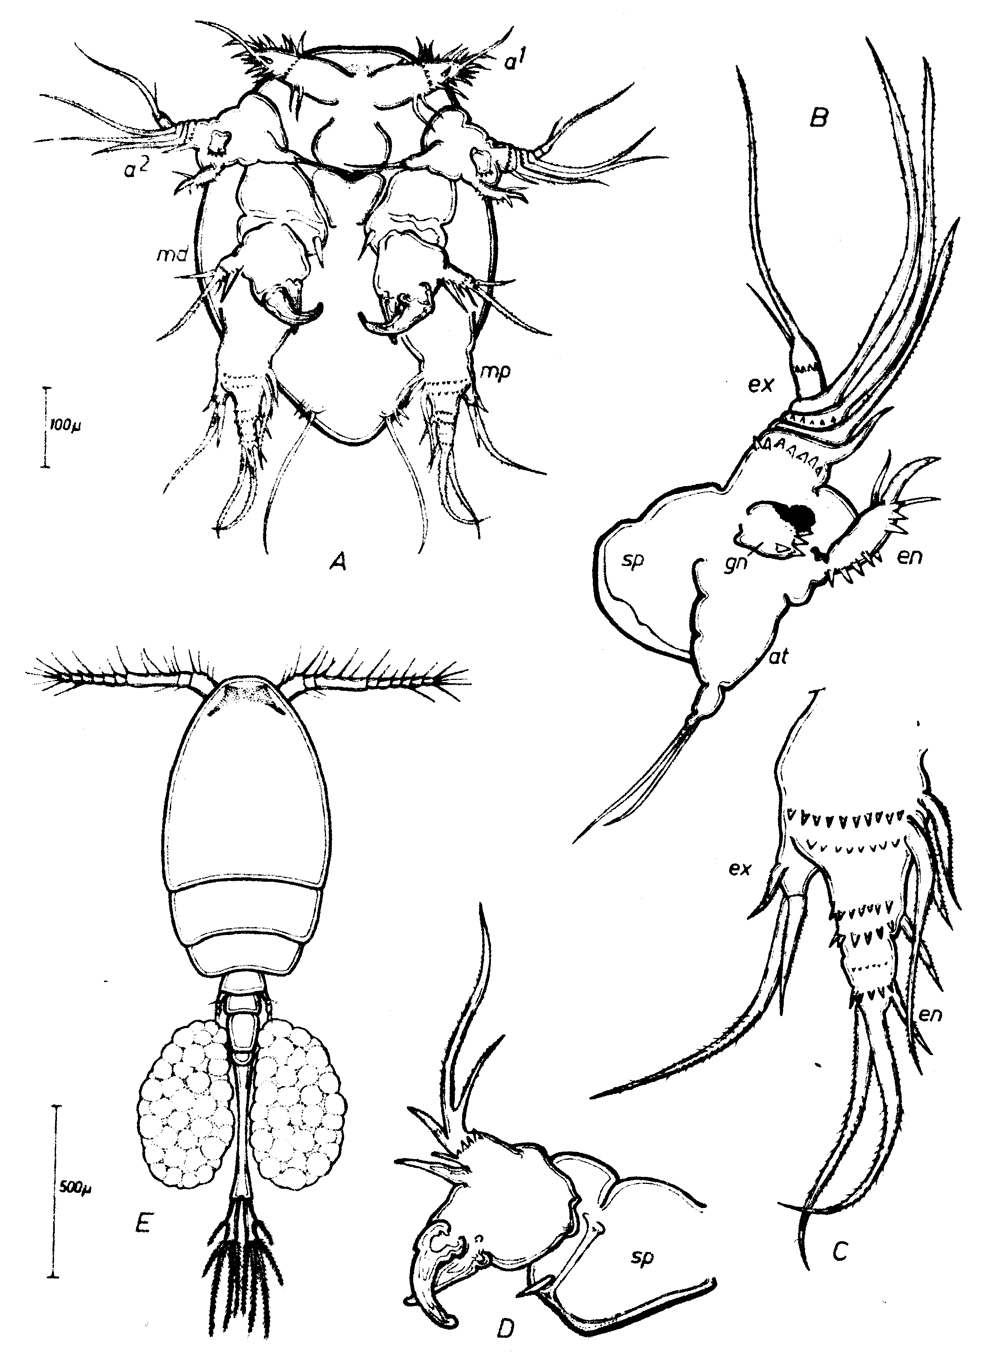 Species Thaumatopsyllus paradoxus - Plate 9 of morphological figures